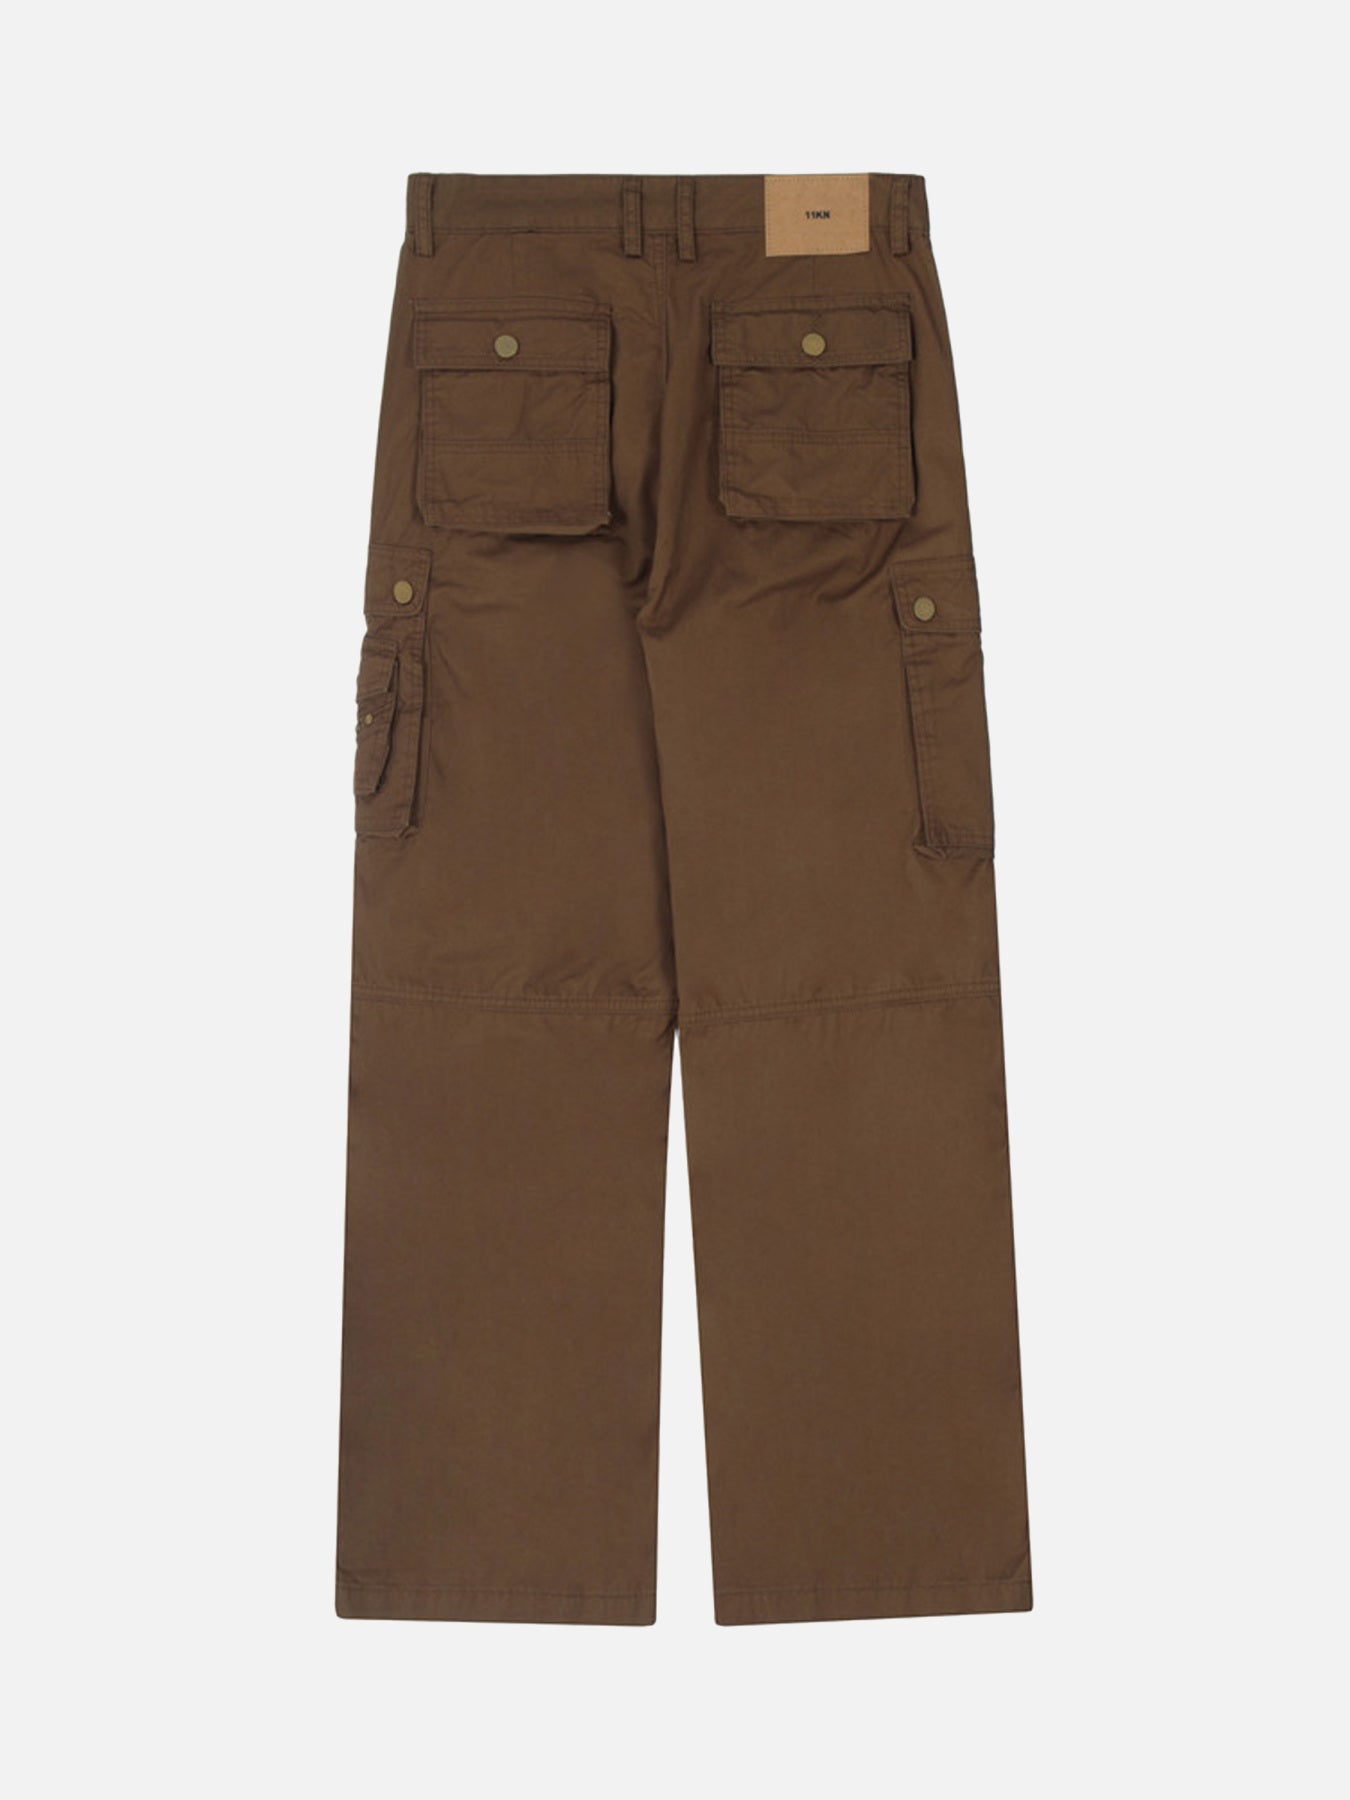 Thesupermade Multi-pocket Work Pants - 1905